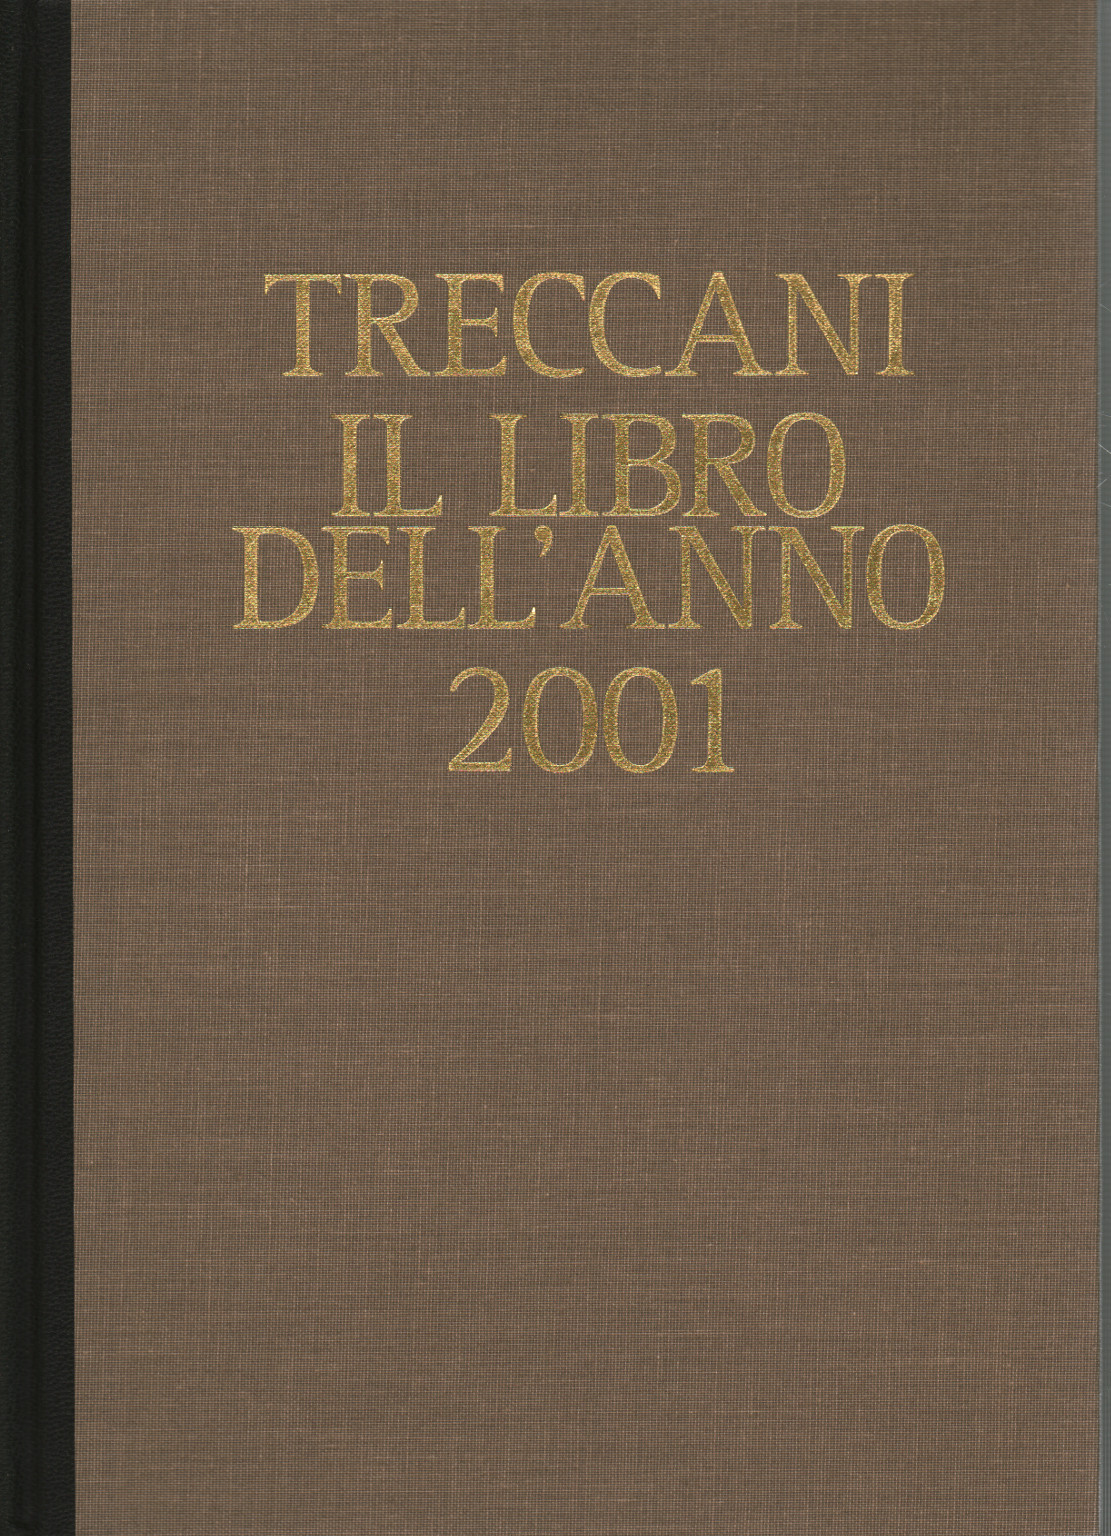 Treccani. El libro del año 2001, s.una.